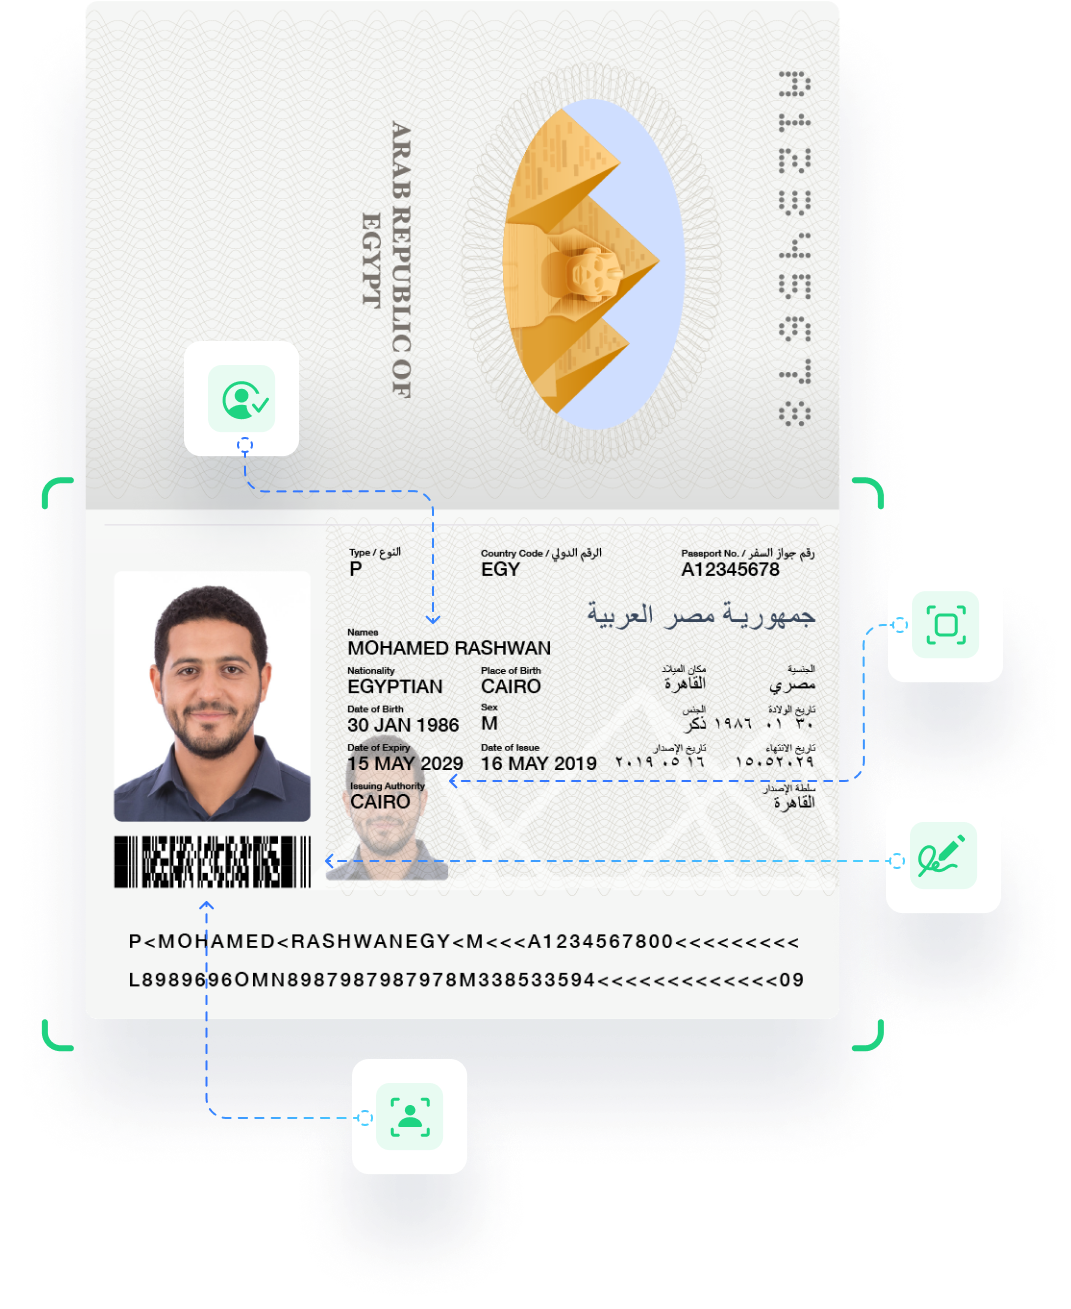 Egyptian passport digital identity verification services